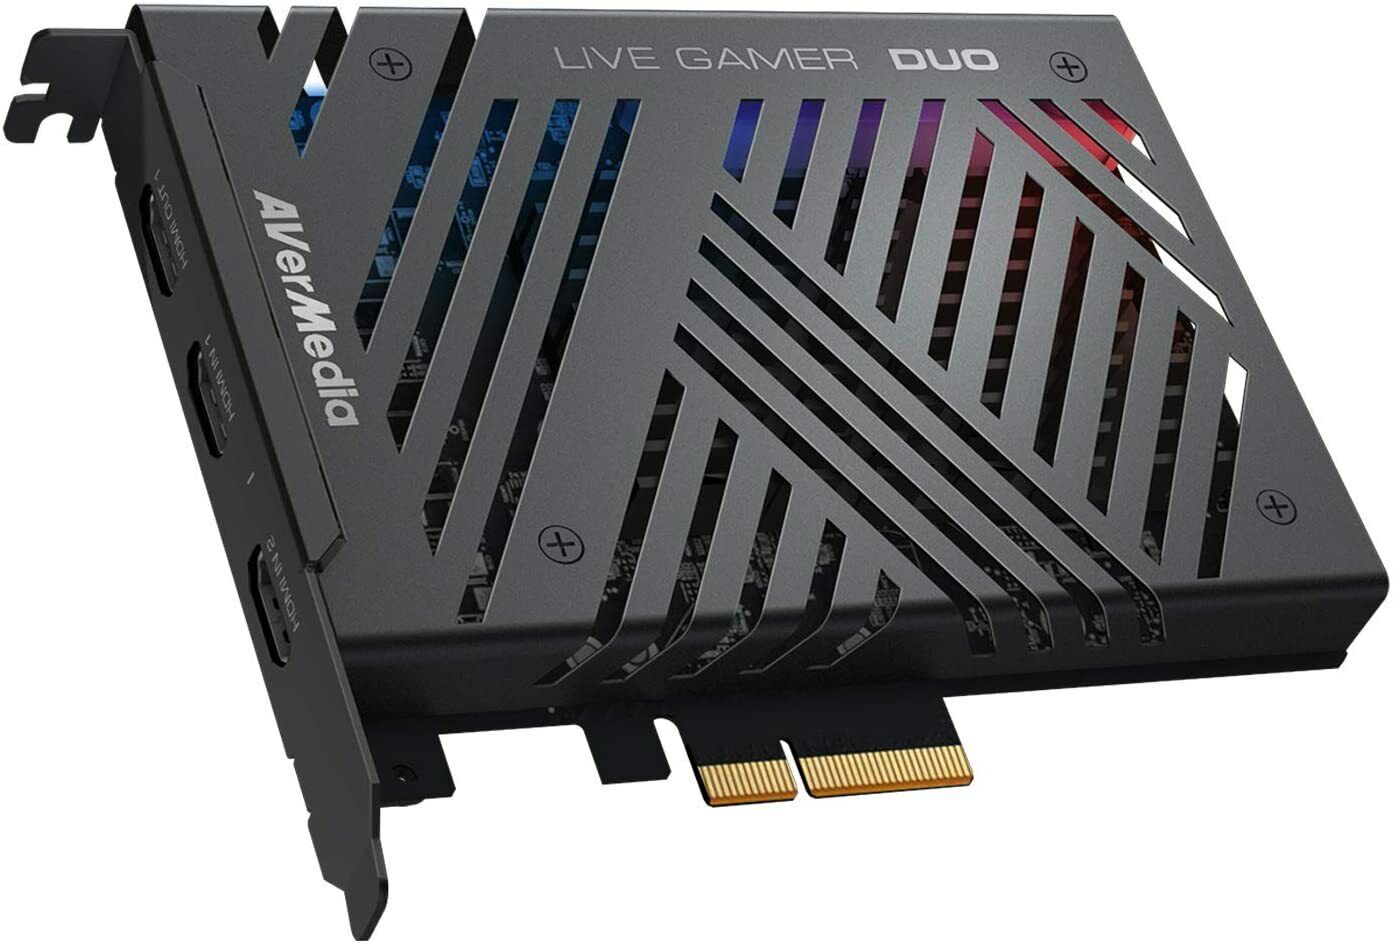 AVerMedia GC570D Live Gamer DUO Dual HDMI 1080p Video Capture Card